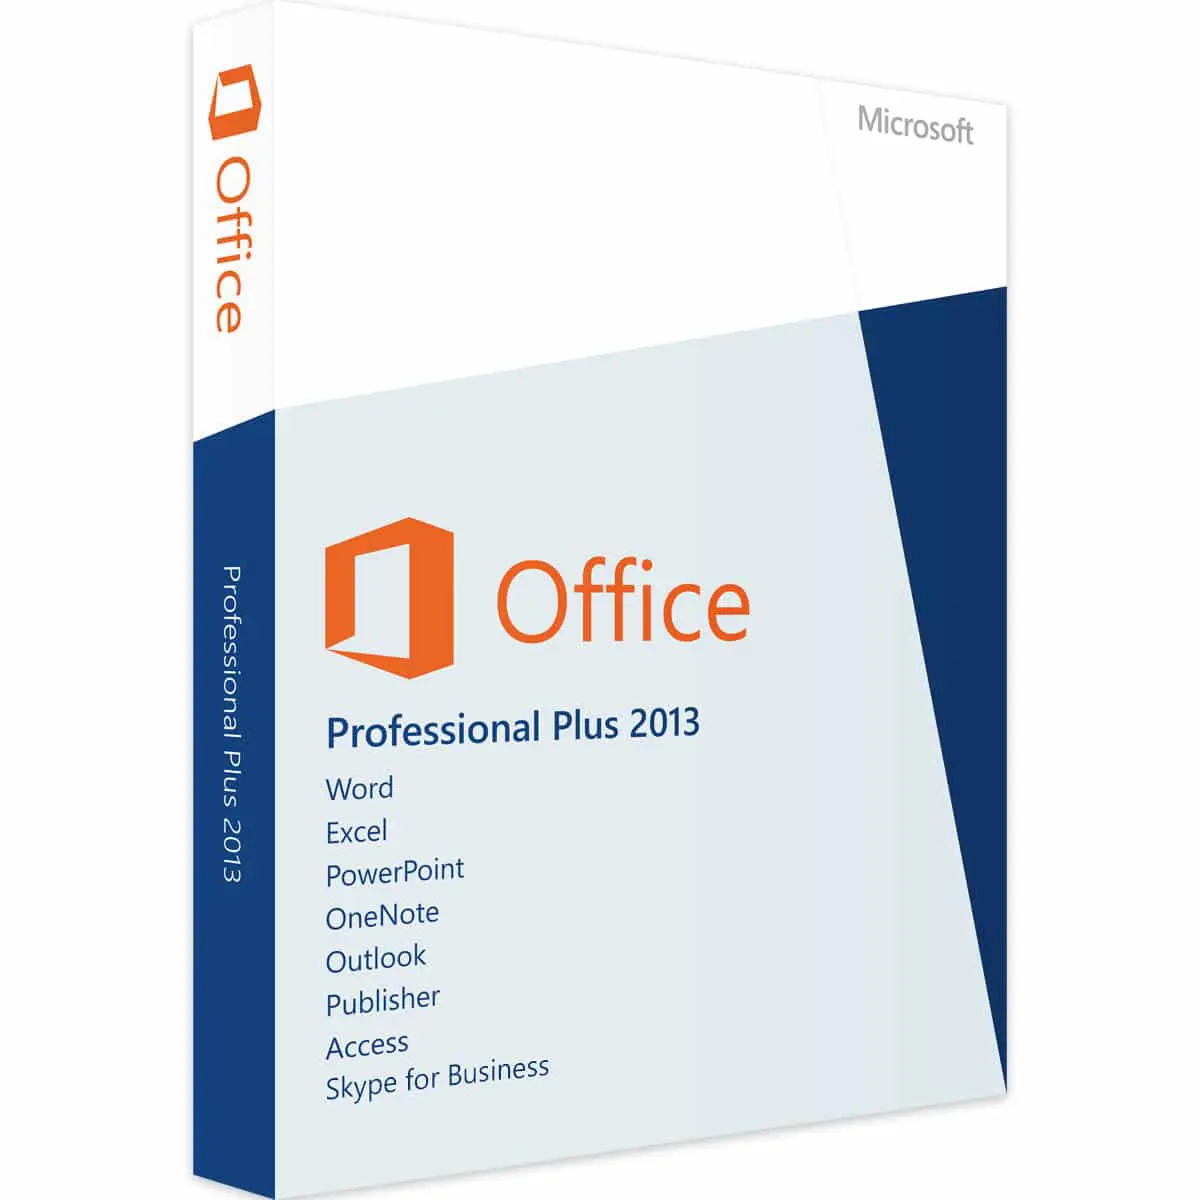 Microsoft Office 2013 Professional Plus Lifetime License Key